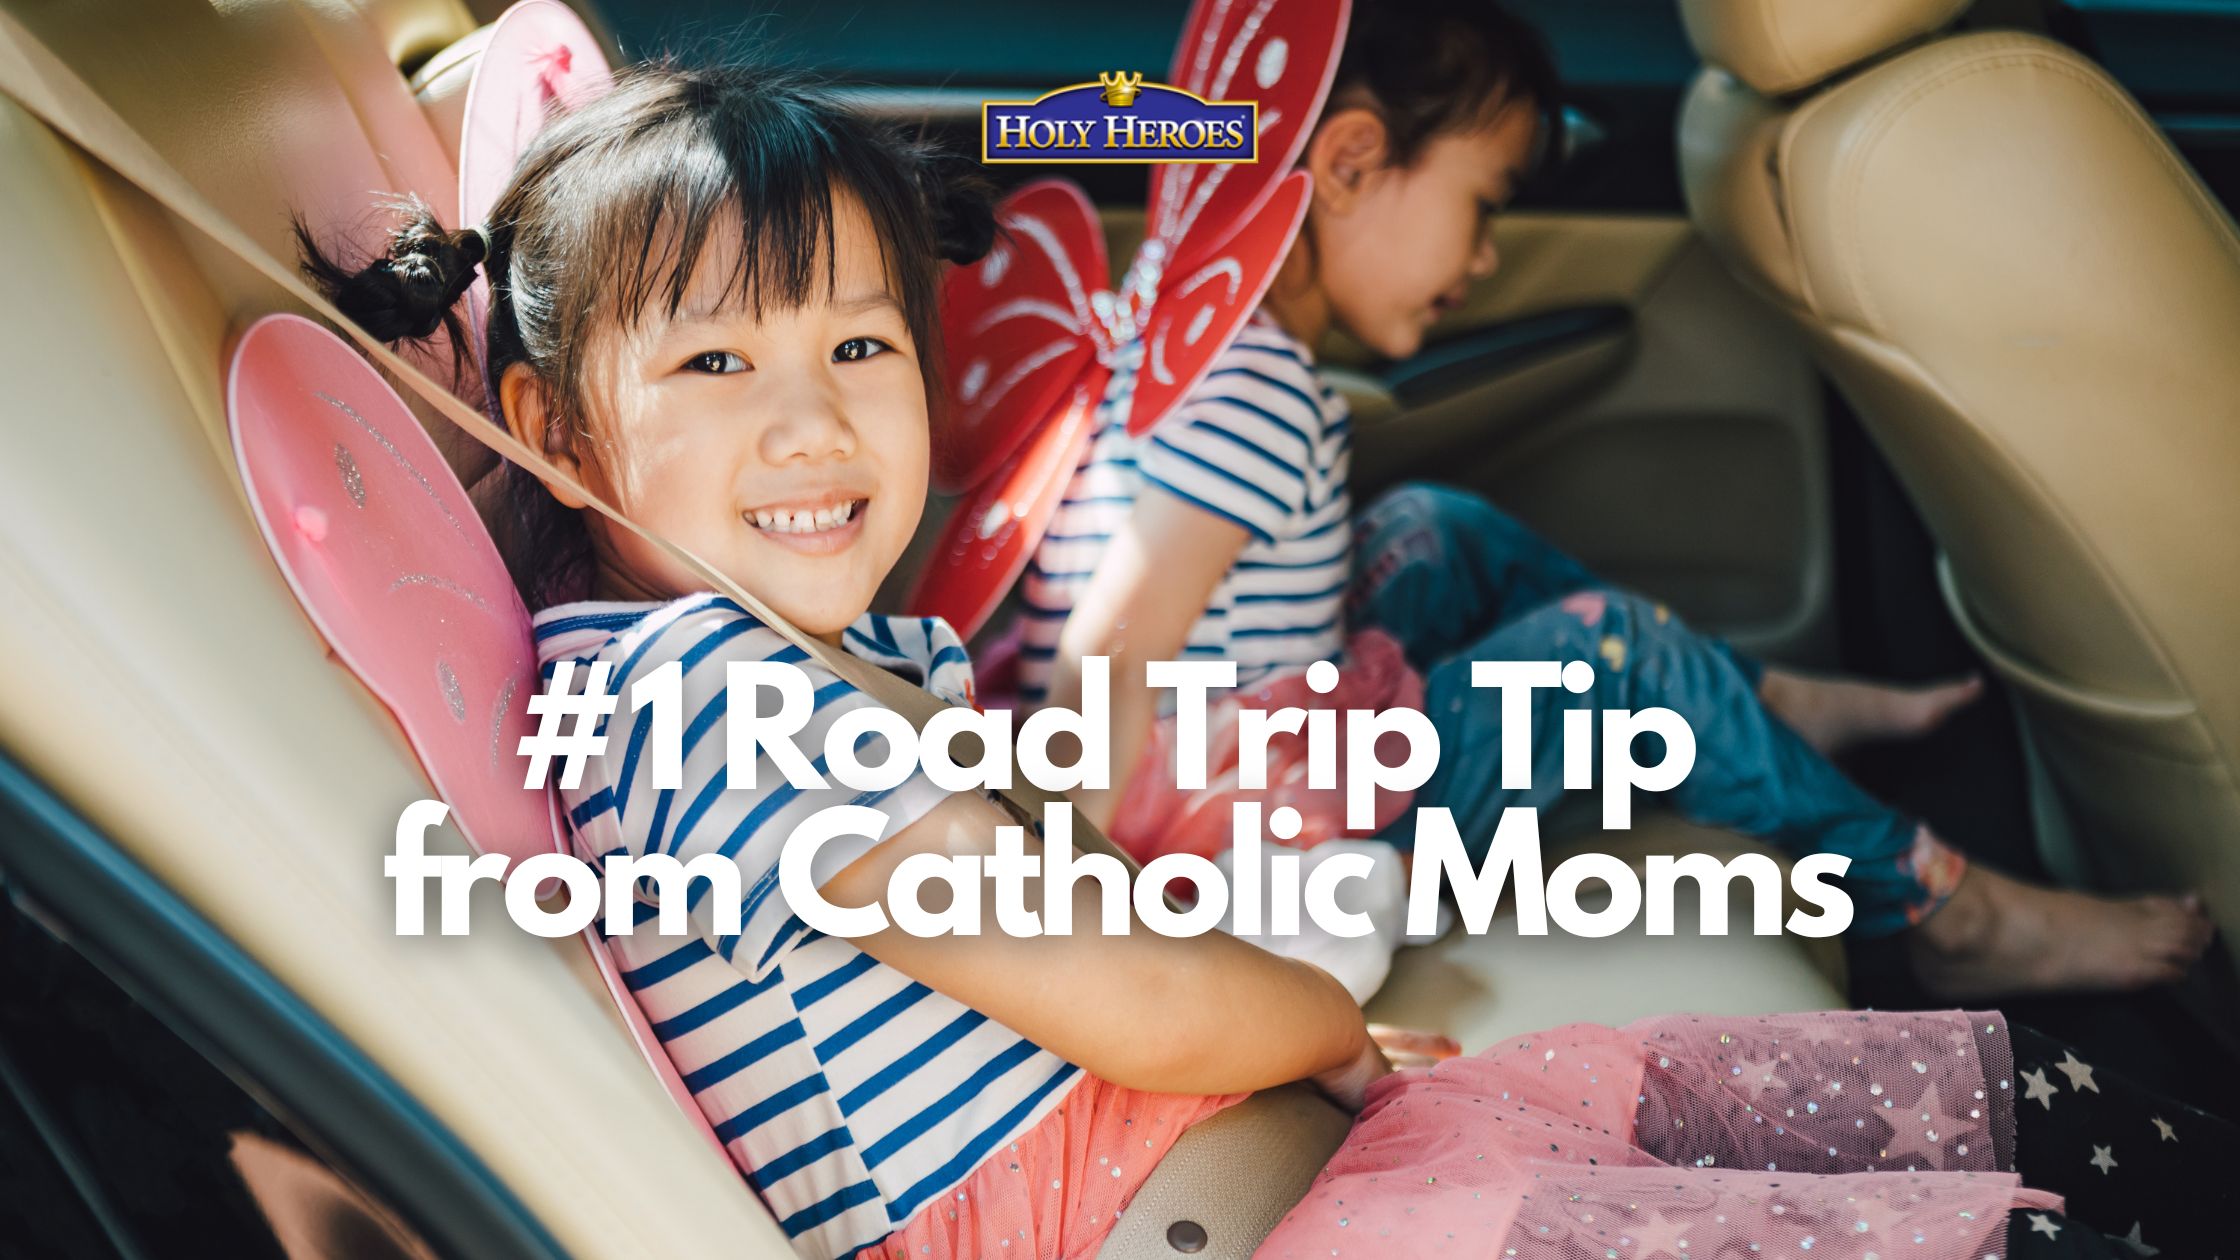 Catholic Moms Share #1 Roadtrip Tip